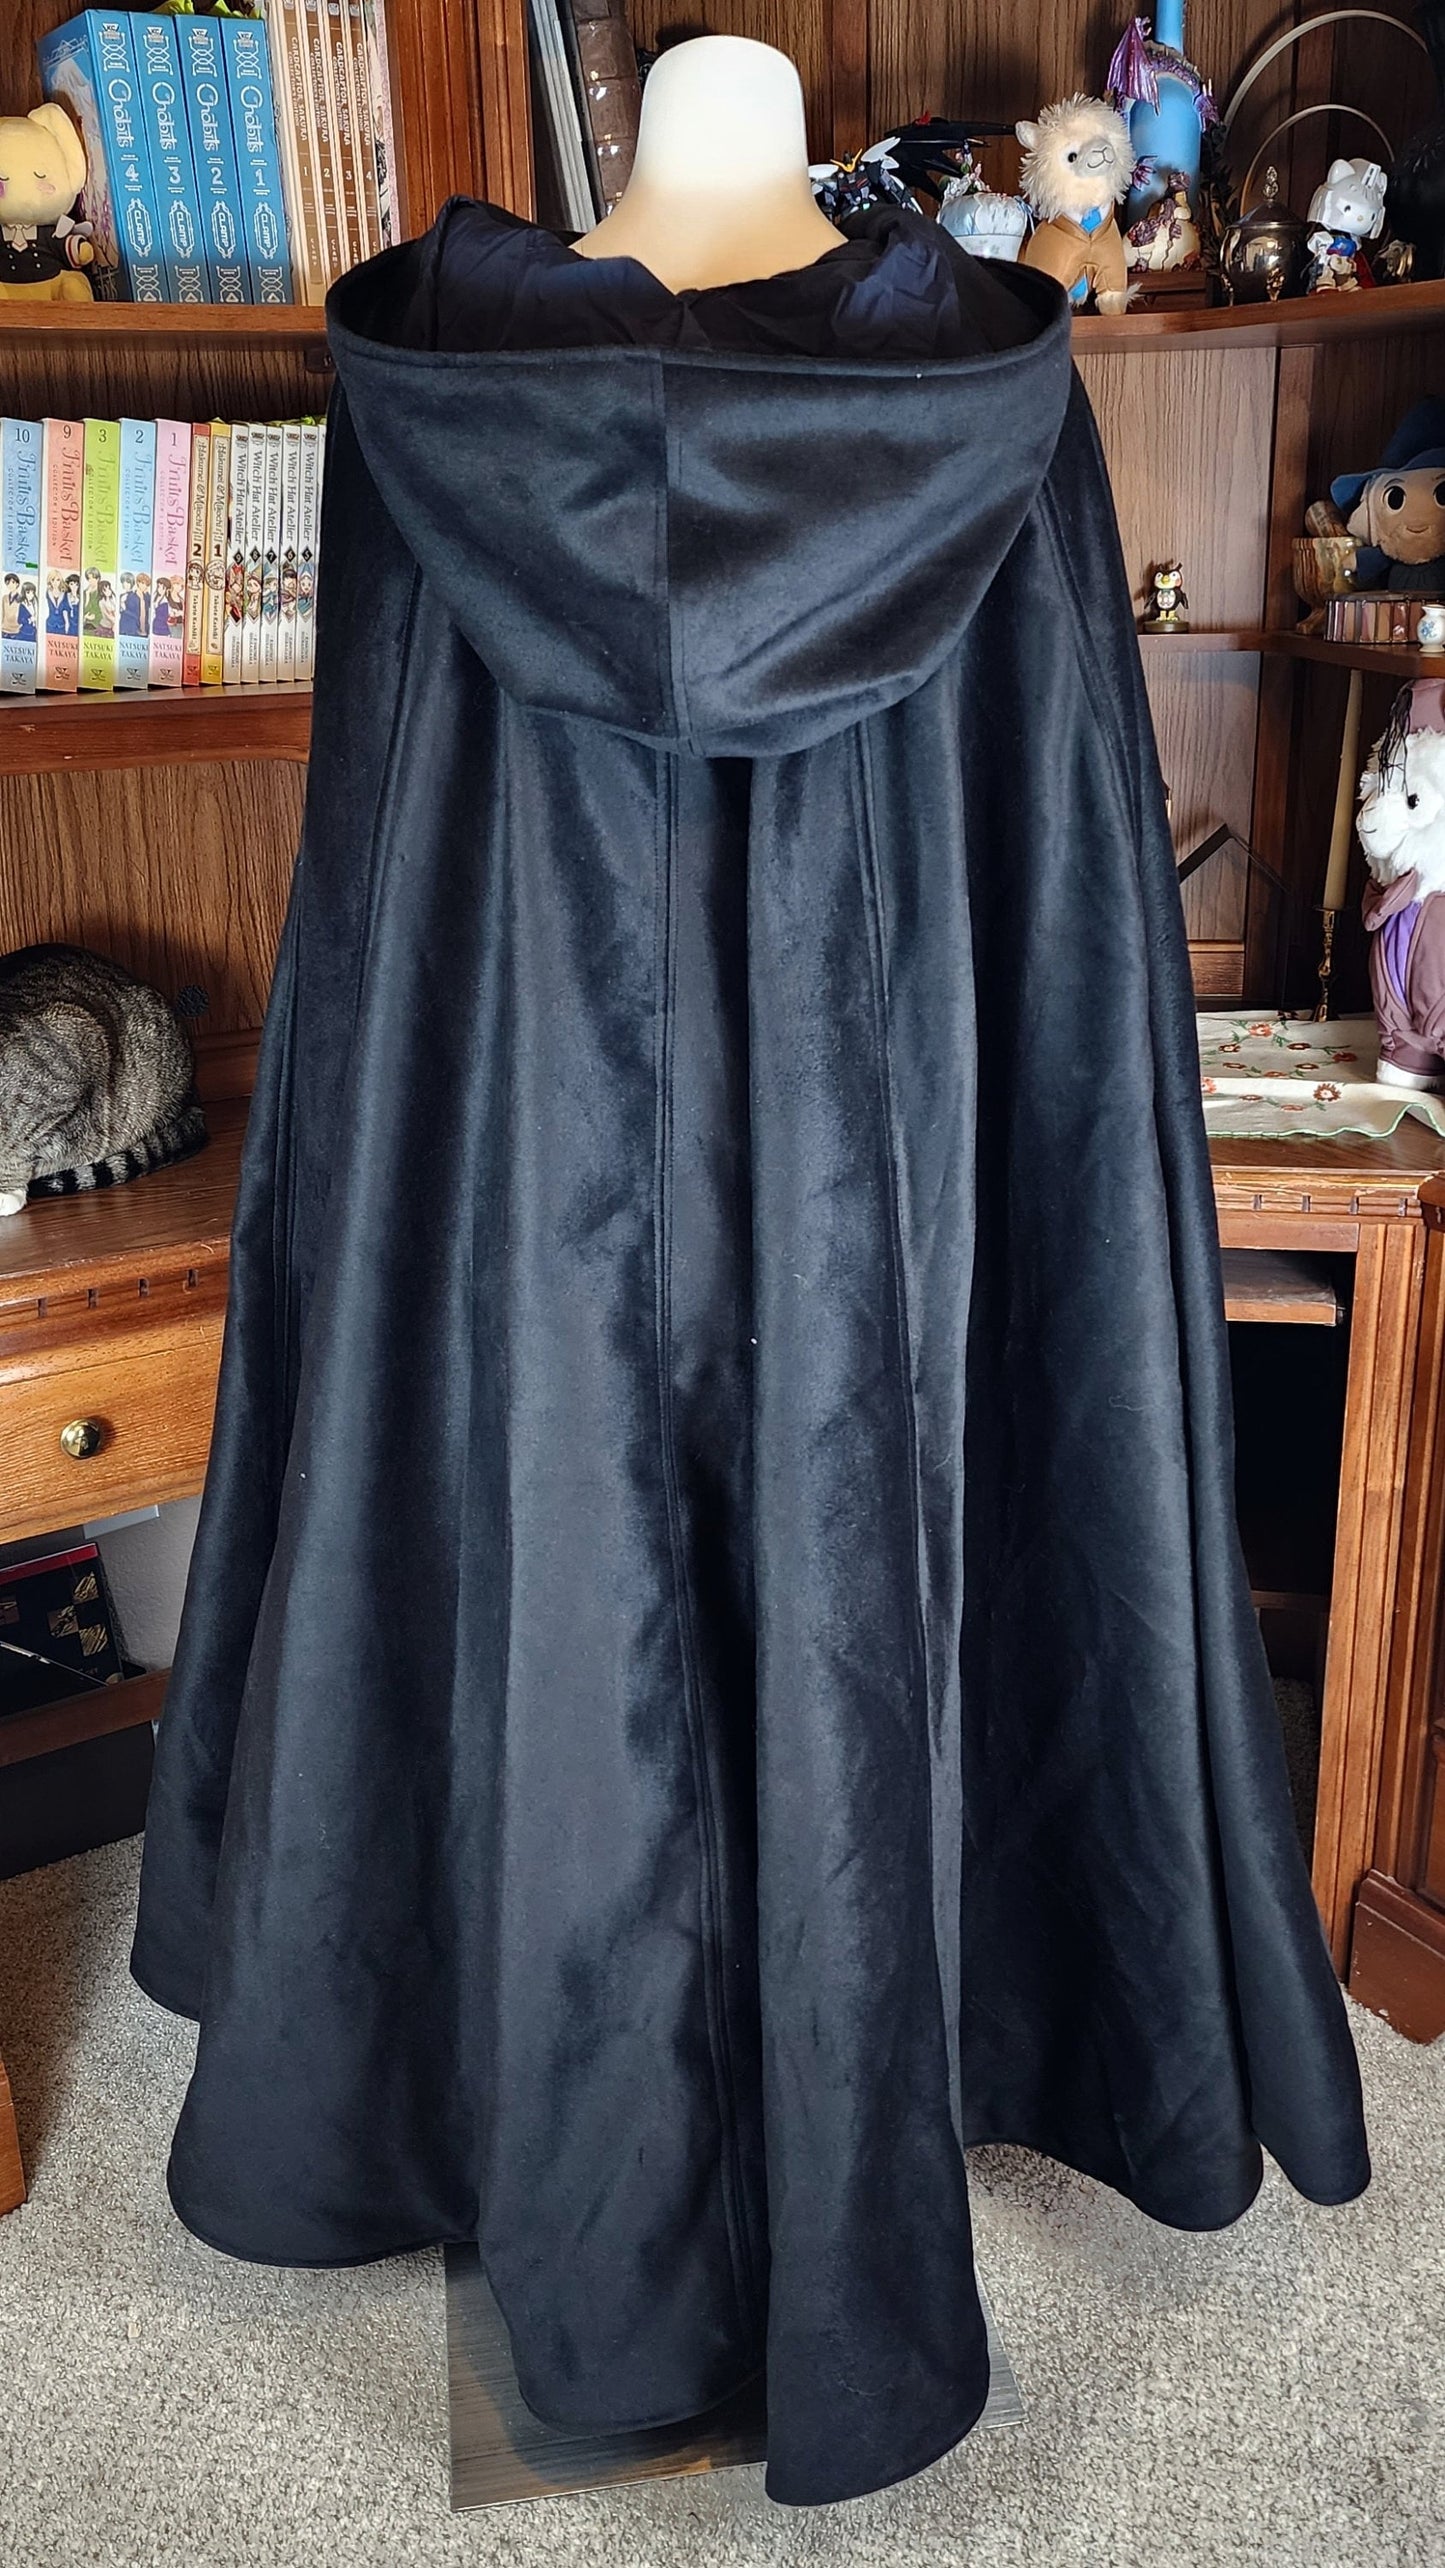 Winter Wanderer Cloak- Black cloak with Navy water resistant lining